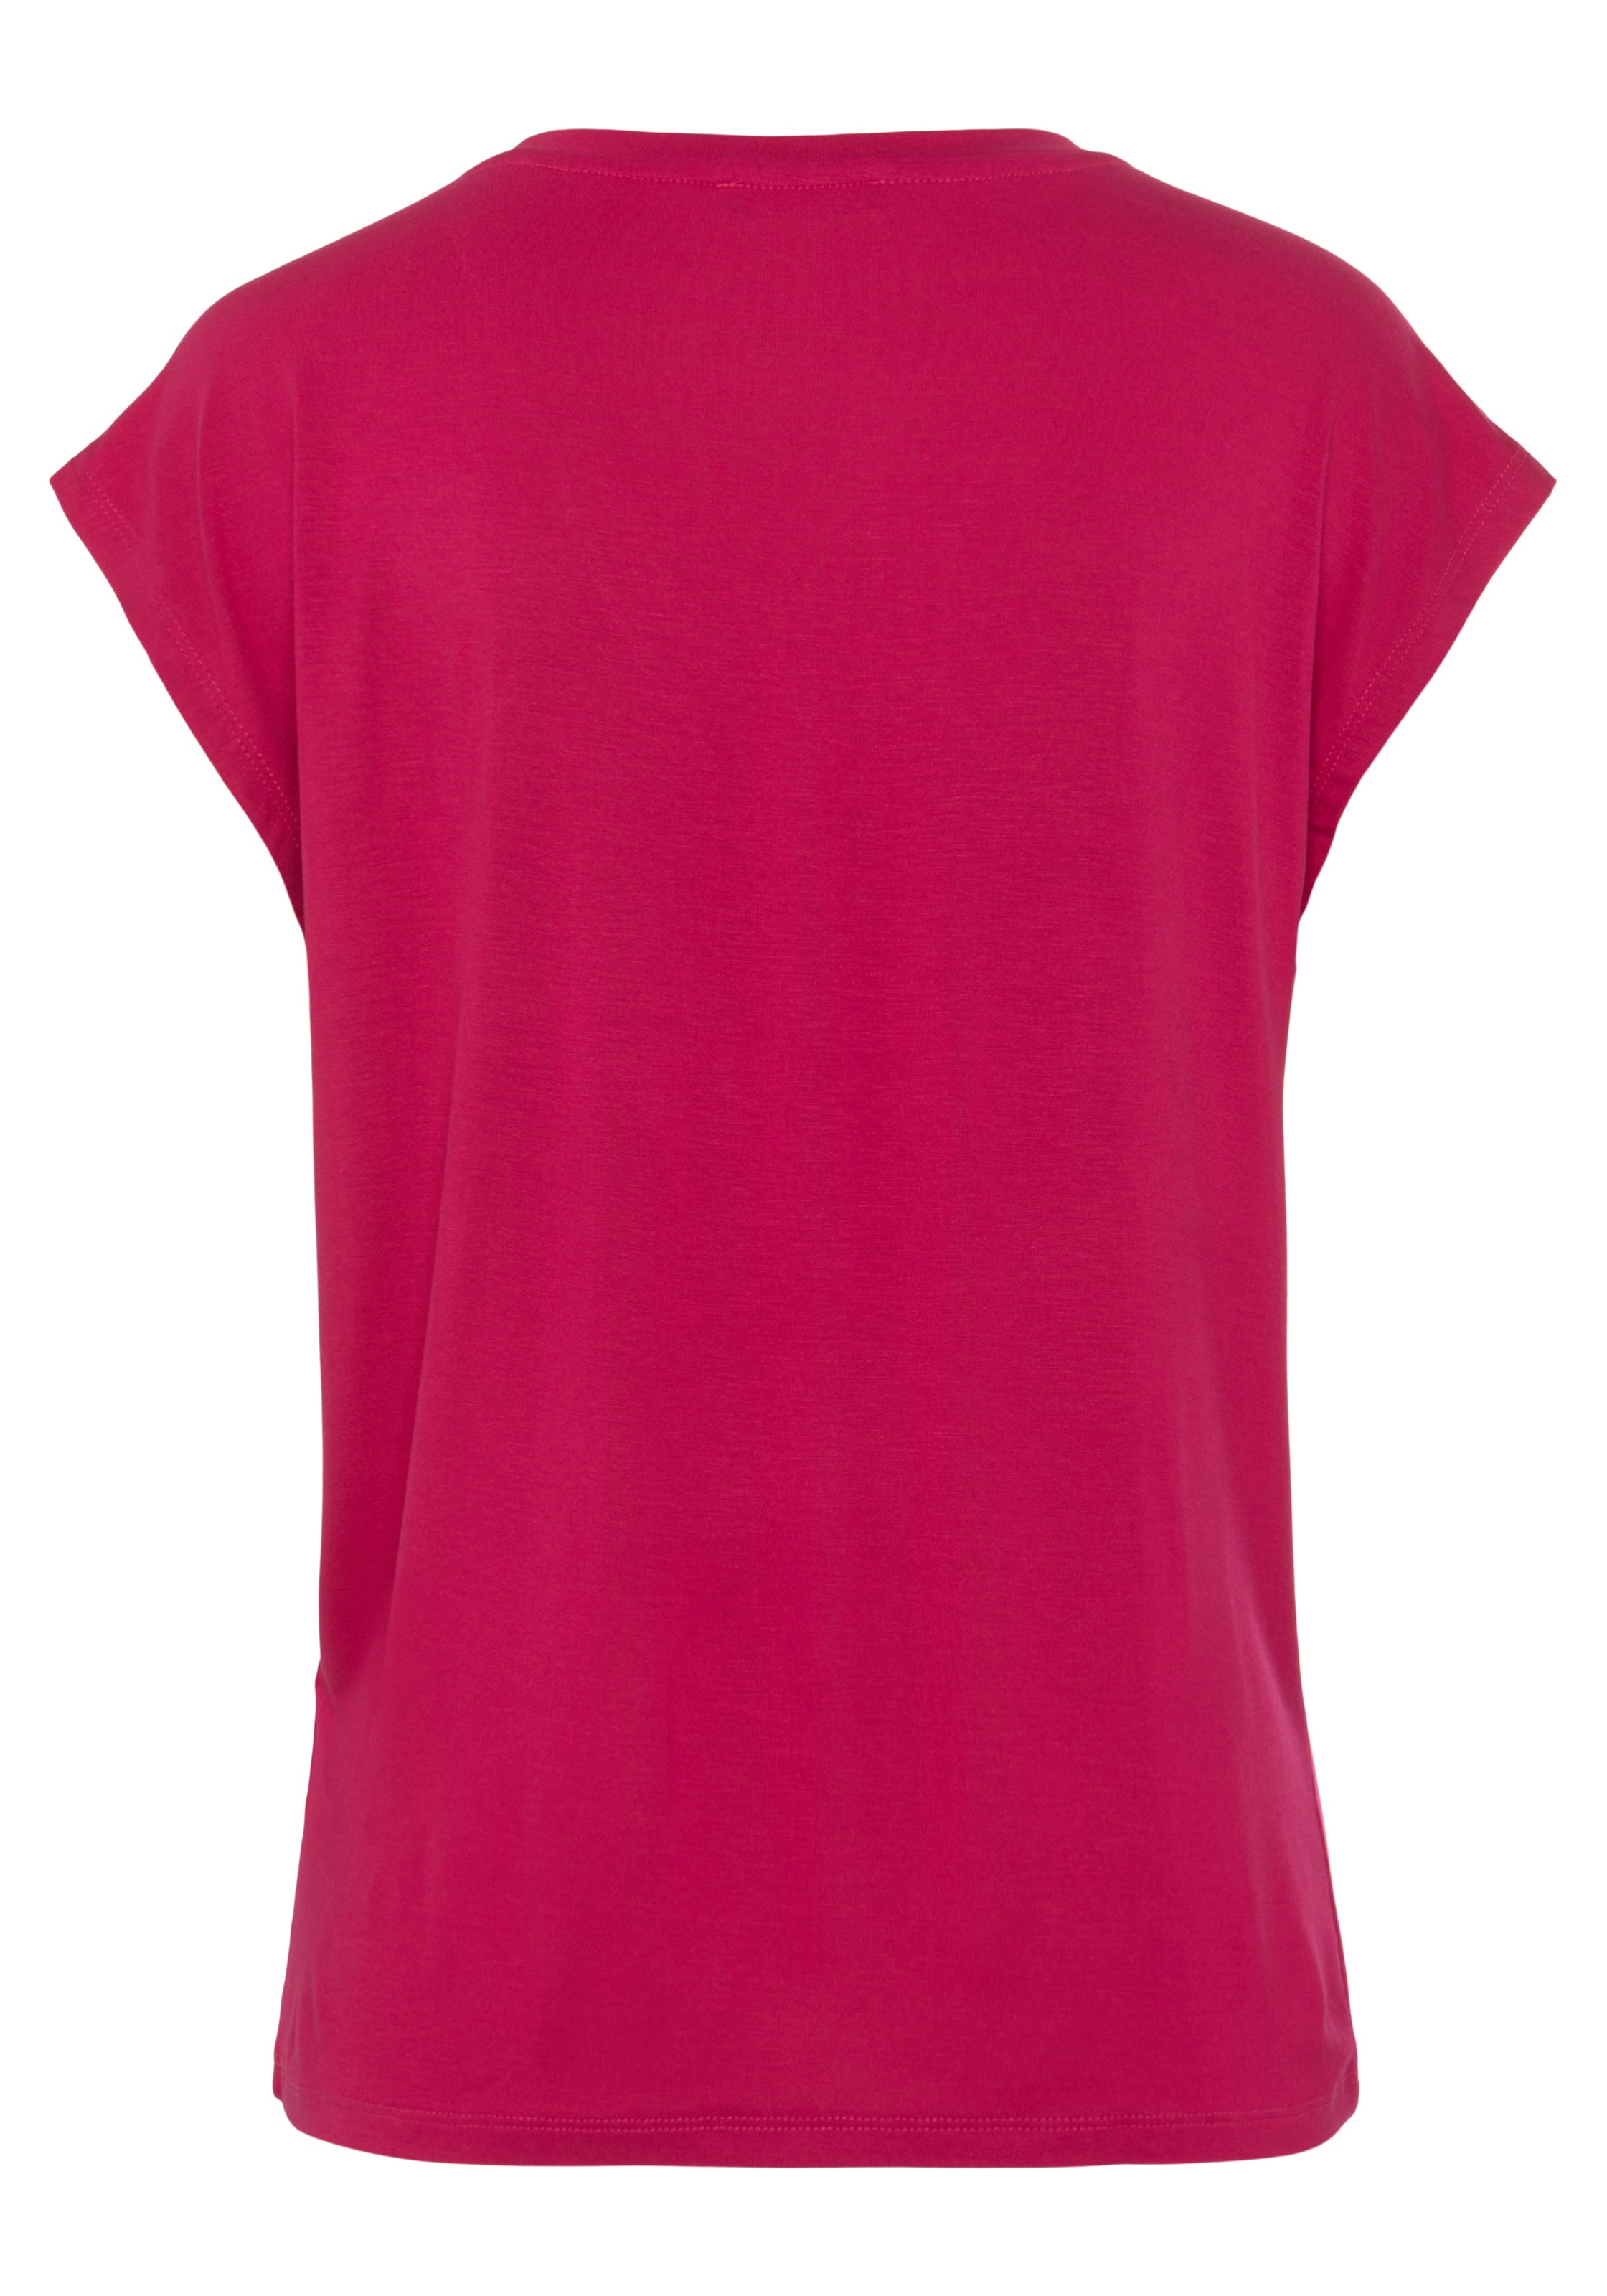 United Colors of Benetton lässiger bestellen OTTO Shop »T-SHIRT«, V-Shirt im Online in Passform